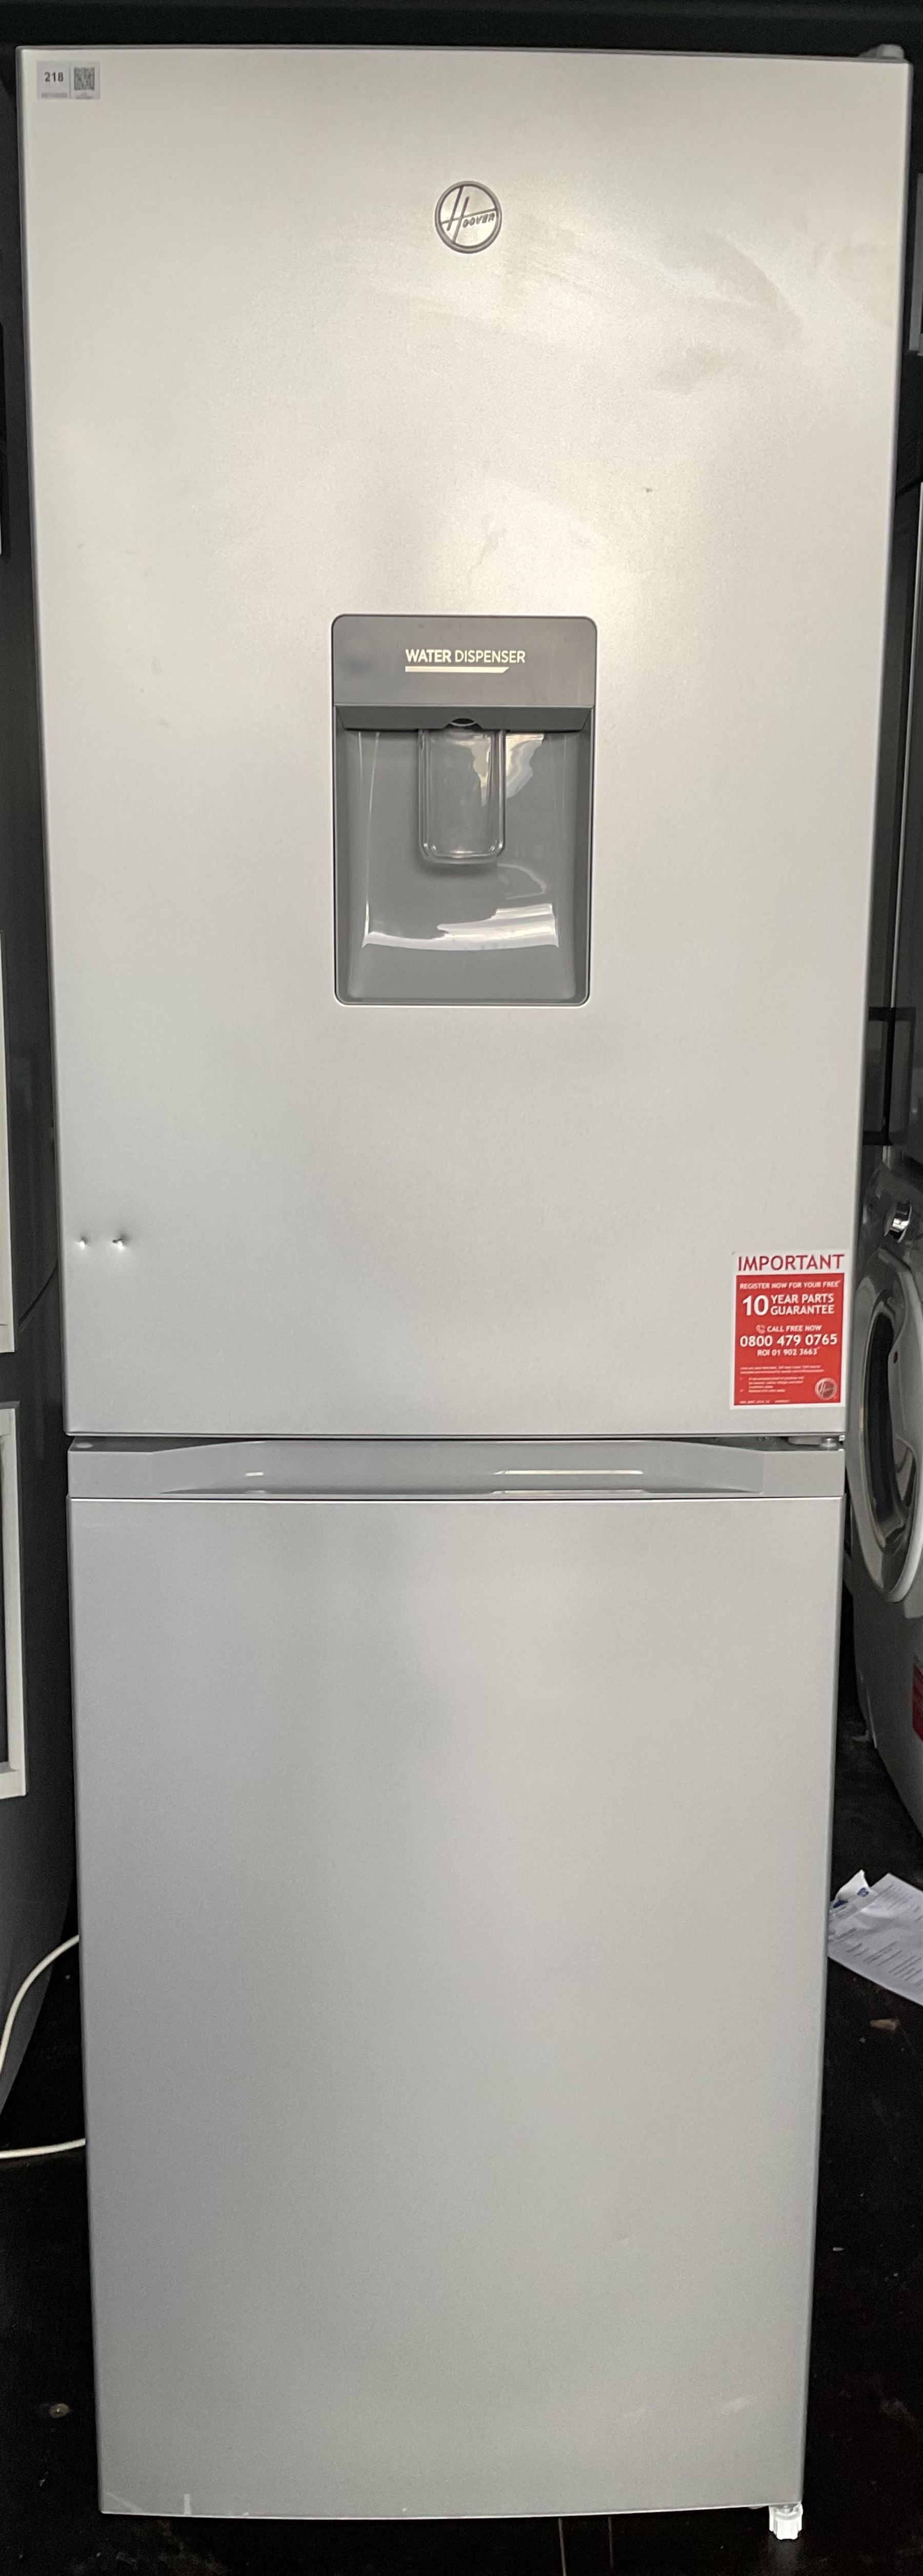 Hoover fridge freezer with water dispenser